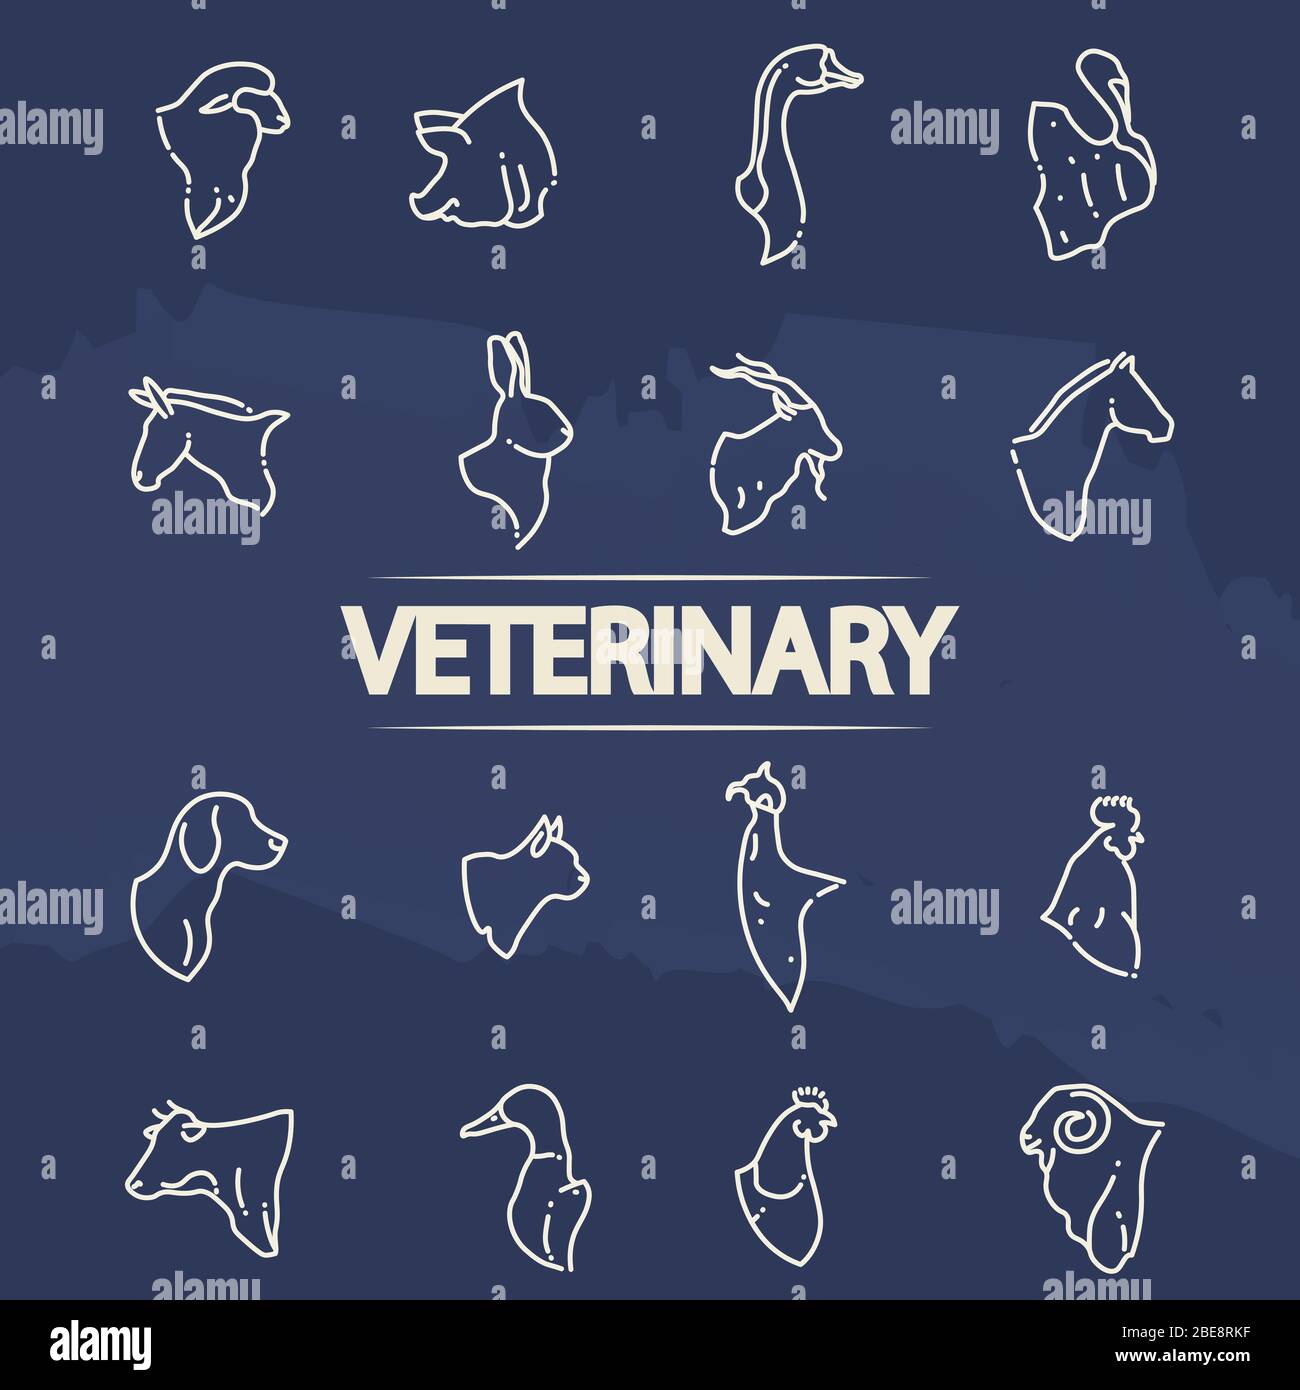 Veterinary icons - line animal heads icons. Line animal head, vector illustration Stock Vector